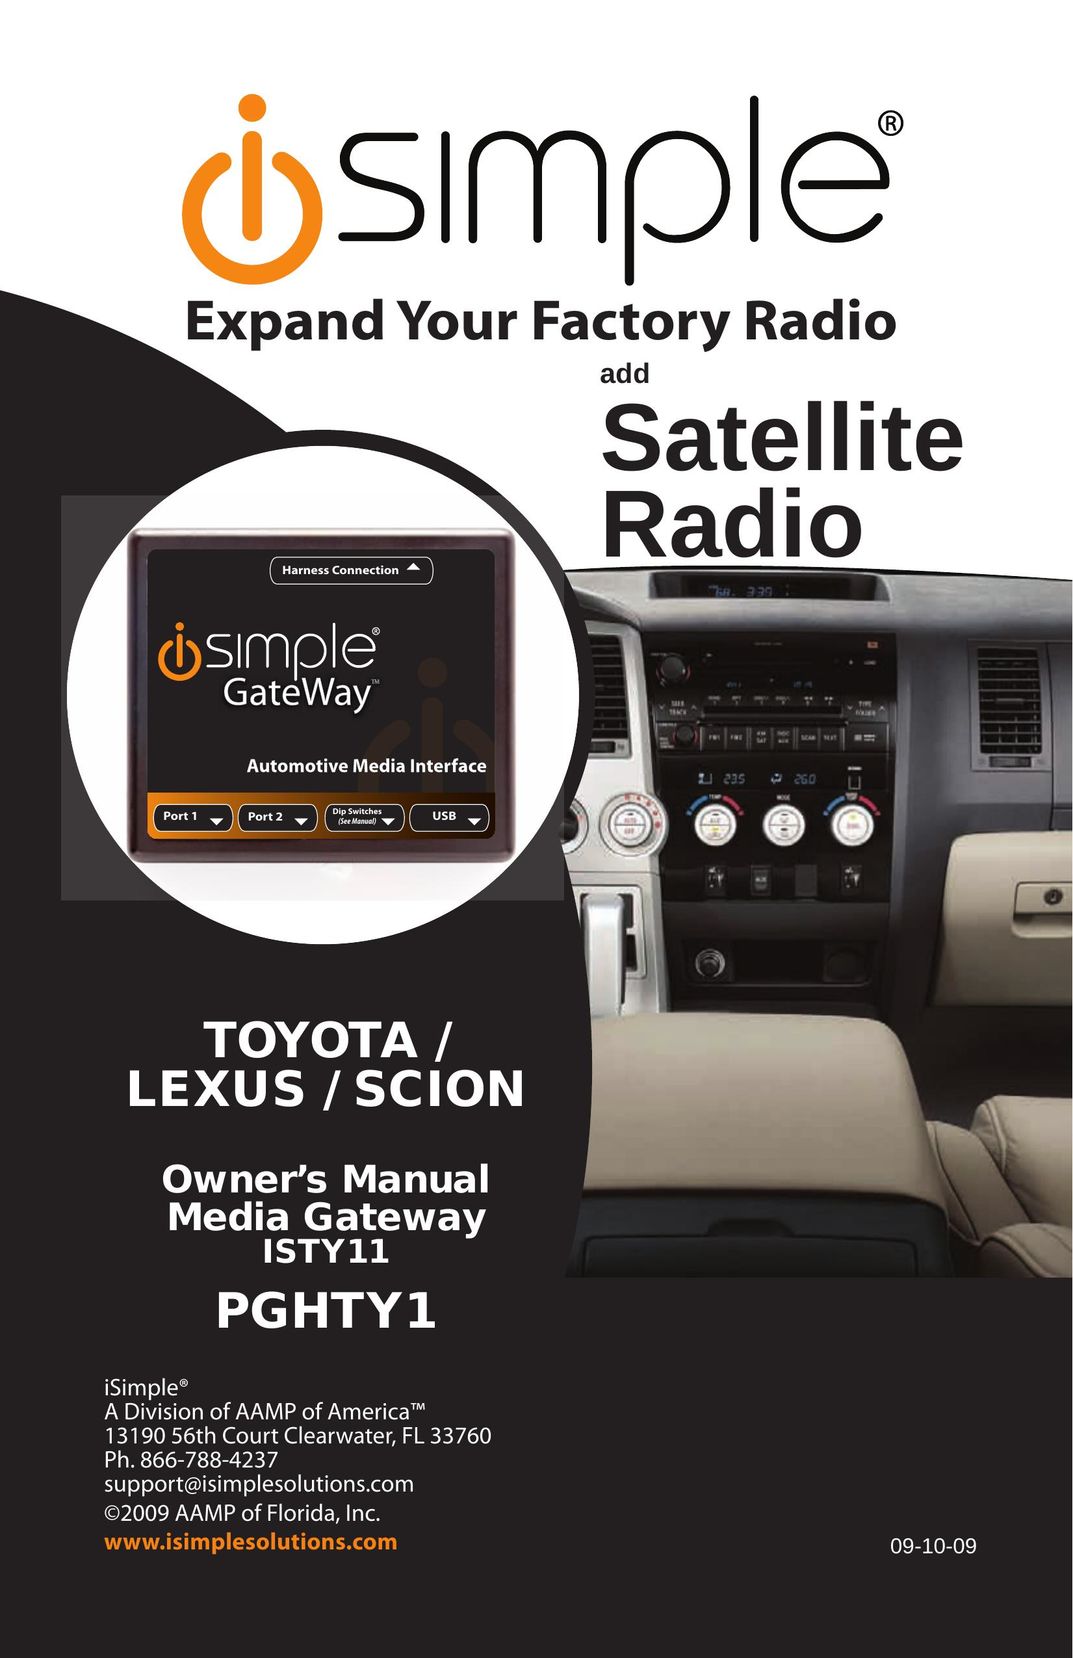 iSimple PGHTY1 Car Satellite Radio System User Manual